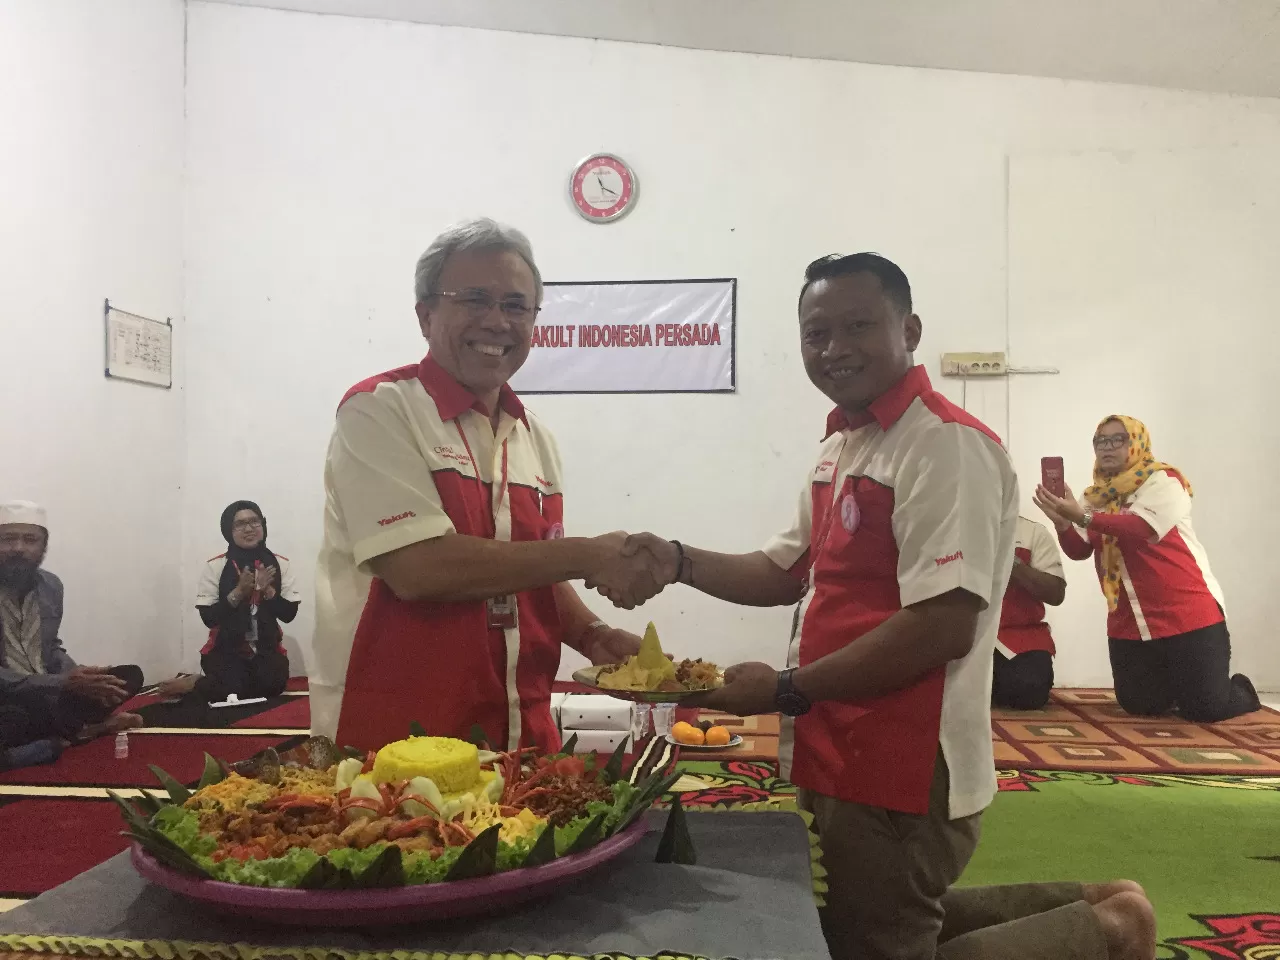 SELAMATAN: Senior Direktur PT Yakult Indonesia Persada Antonius Nababan (kiri) menyerahkan potongan tumpeng kepada Pimpinan Cabang Balikpapan Yuyun Durahman di kantor yang baru, Jalan Mulawarman, Balikpapan Timur.